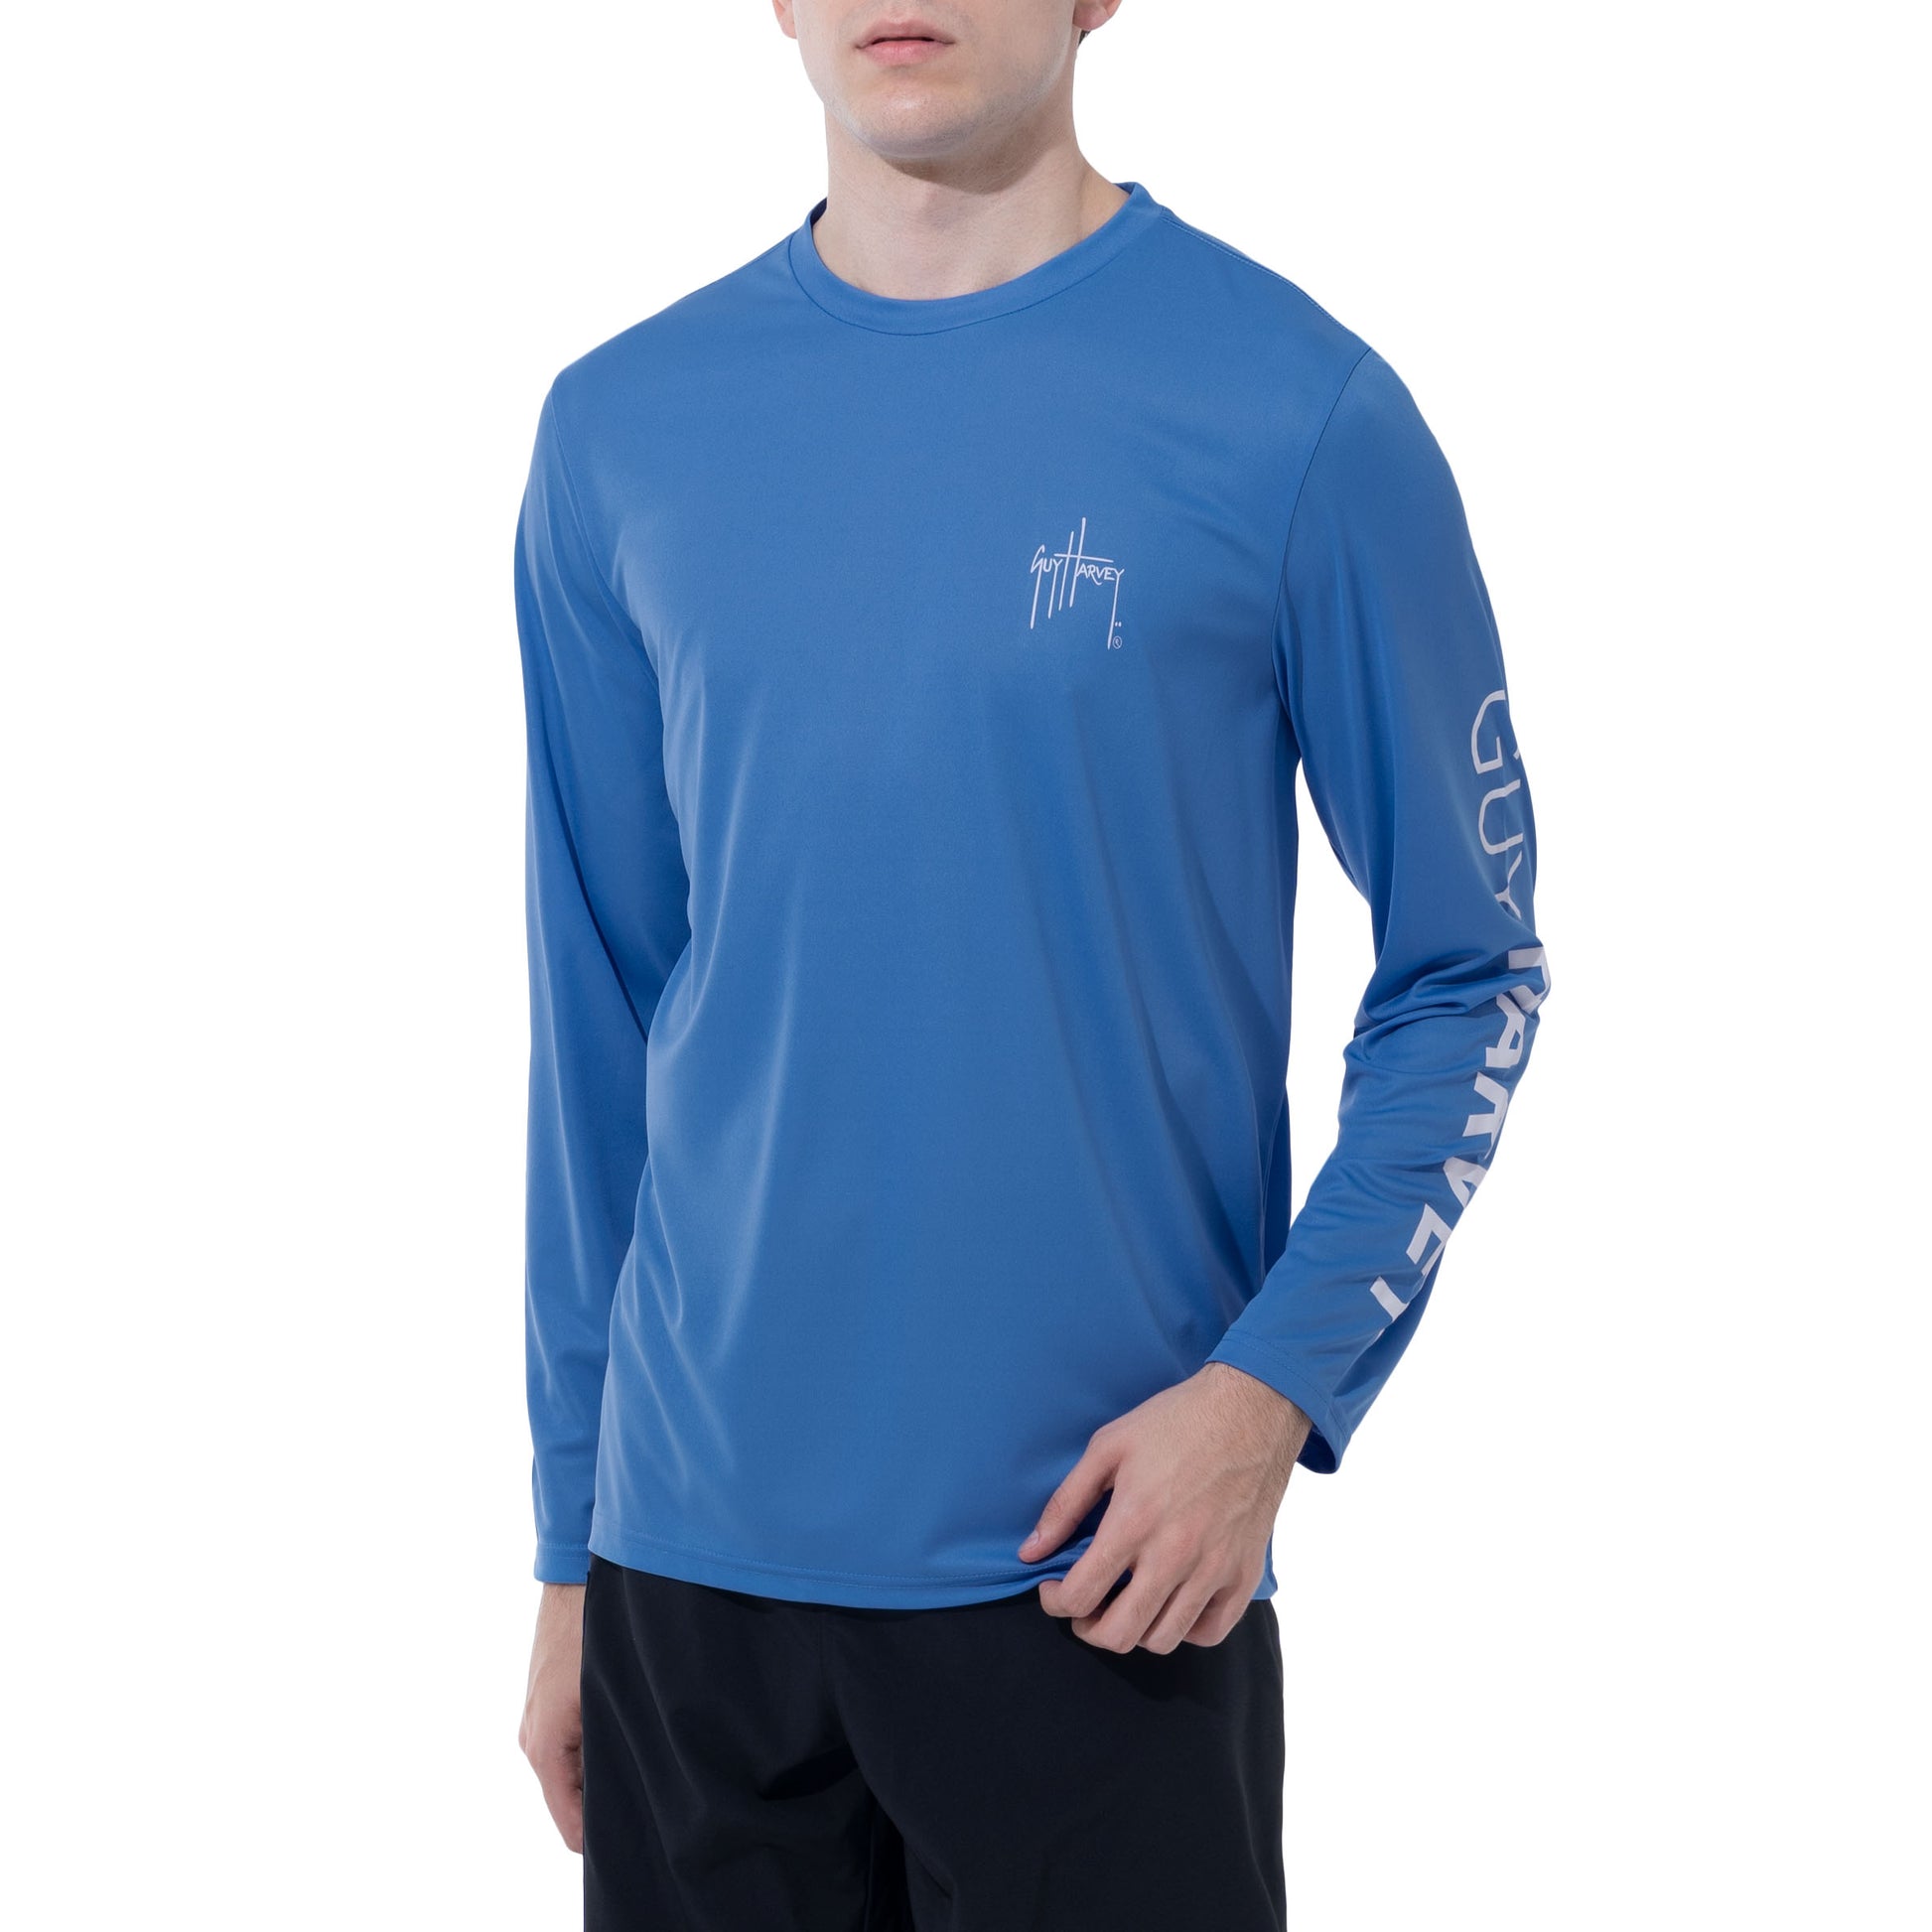 HUK Fishing T-shirt hooded Fishing Shirt Men Long Sleeve Uv Protection 50 Fishing  Shirts Apparel